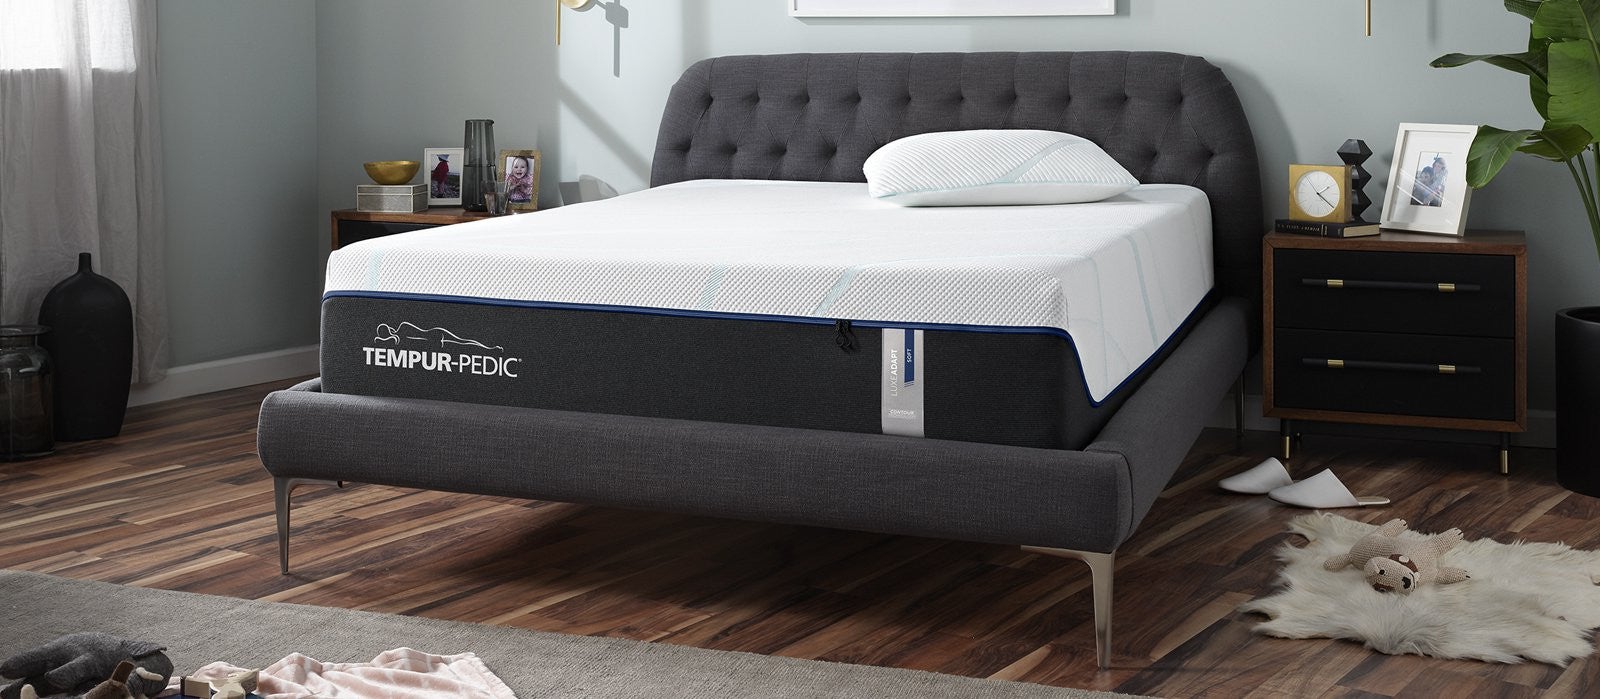 are tempurpedic mattresses latex free